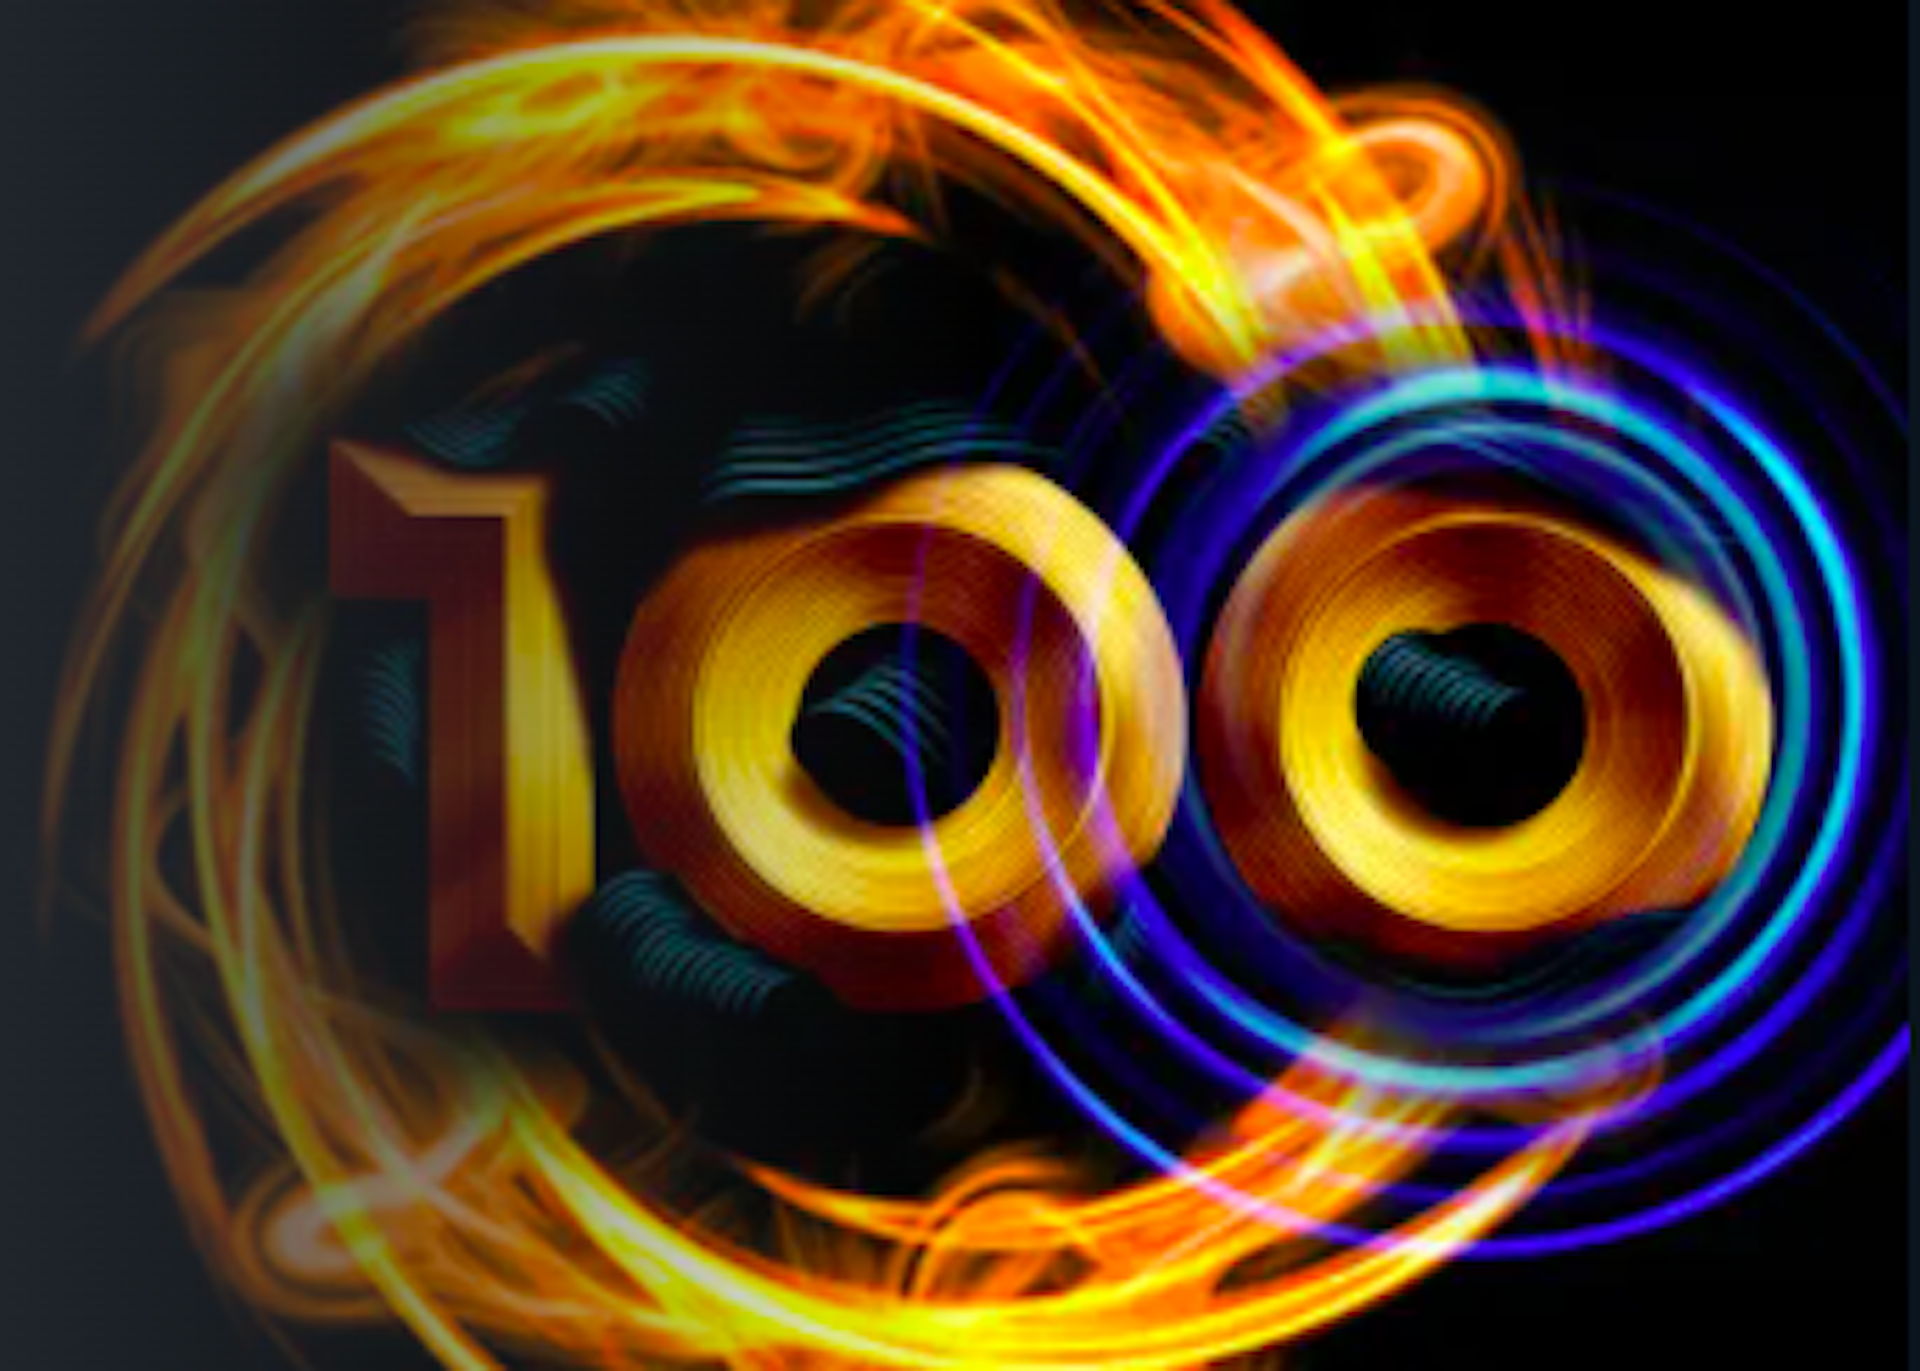 Melbet Bonus for 100 Bets: Place 100 Bets in 30 Days & Get an Amazing Bonus 